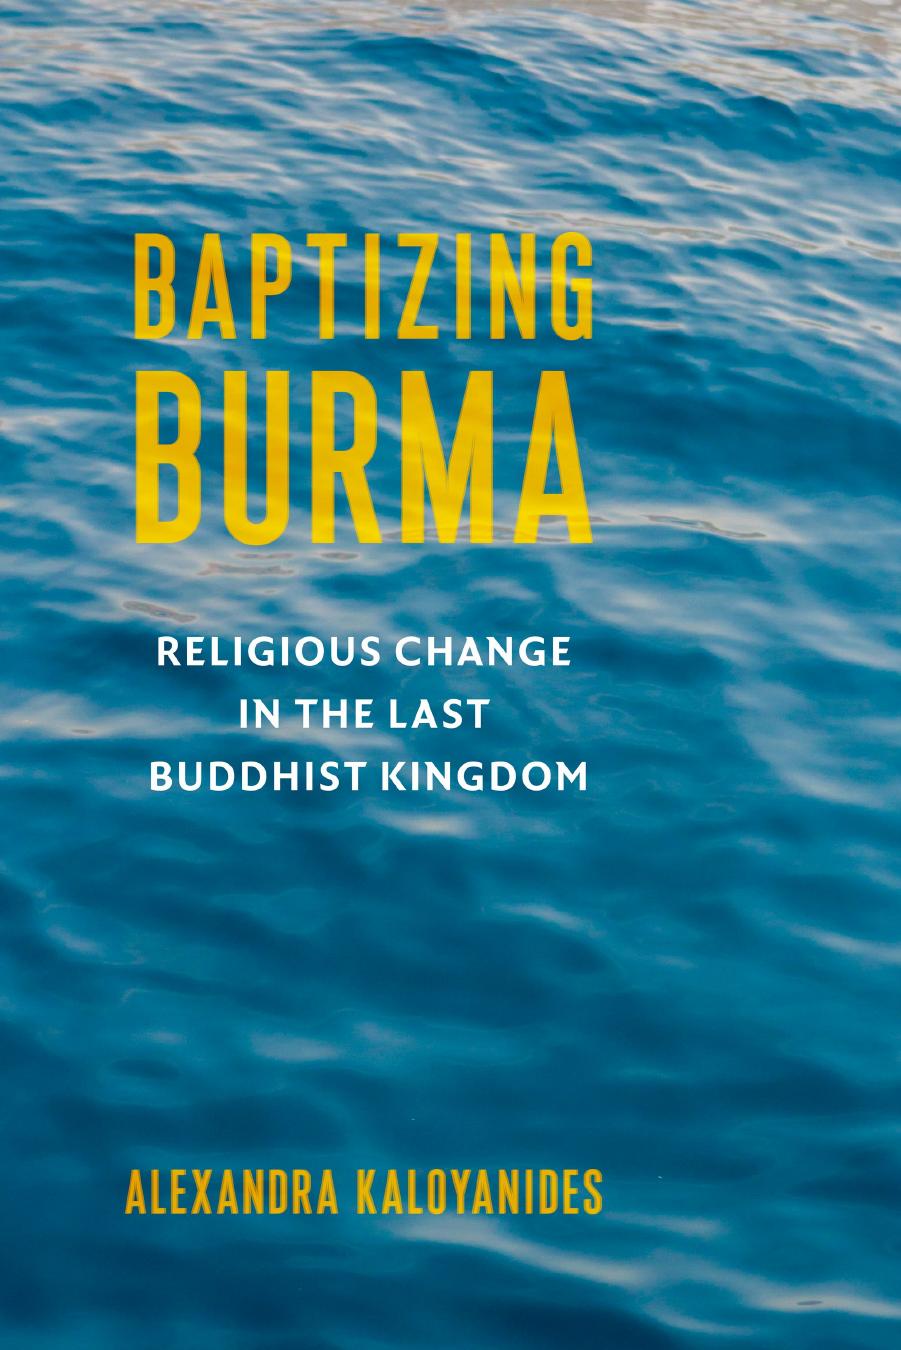 Baptizing Burma: Religious Change in the Last Buddhist Kingdom by Alexandra Kaloyanides